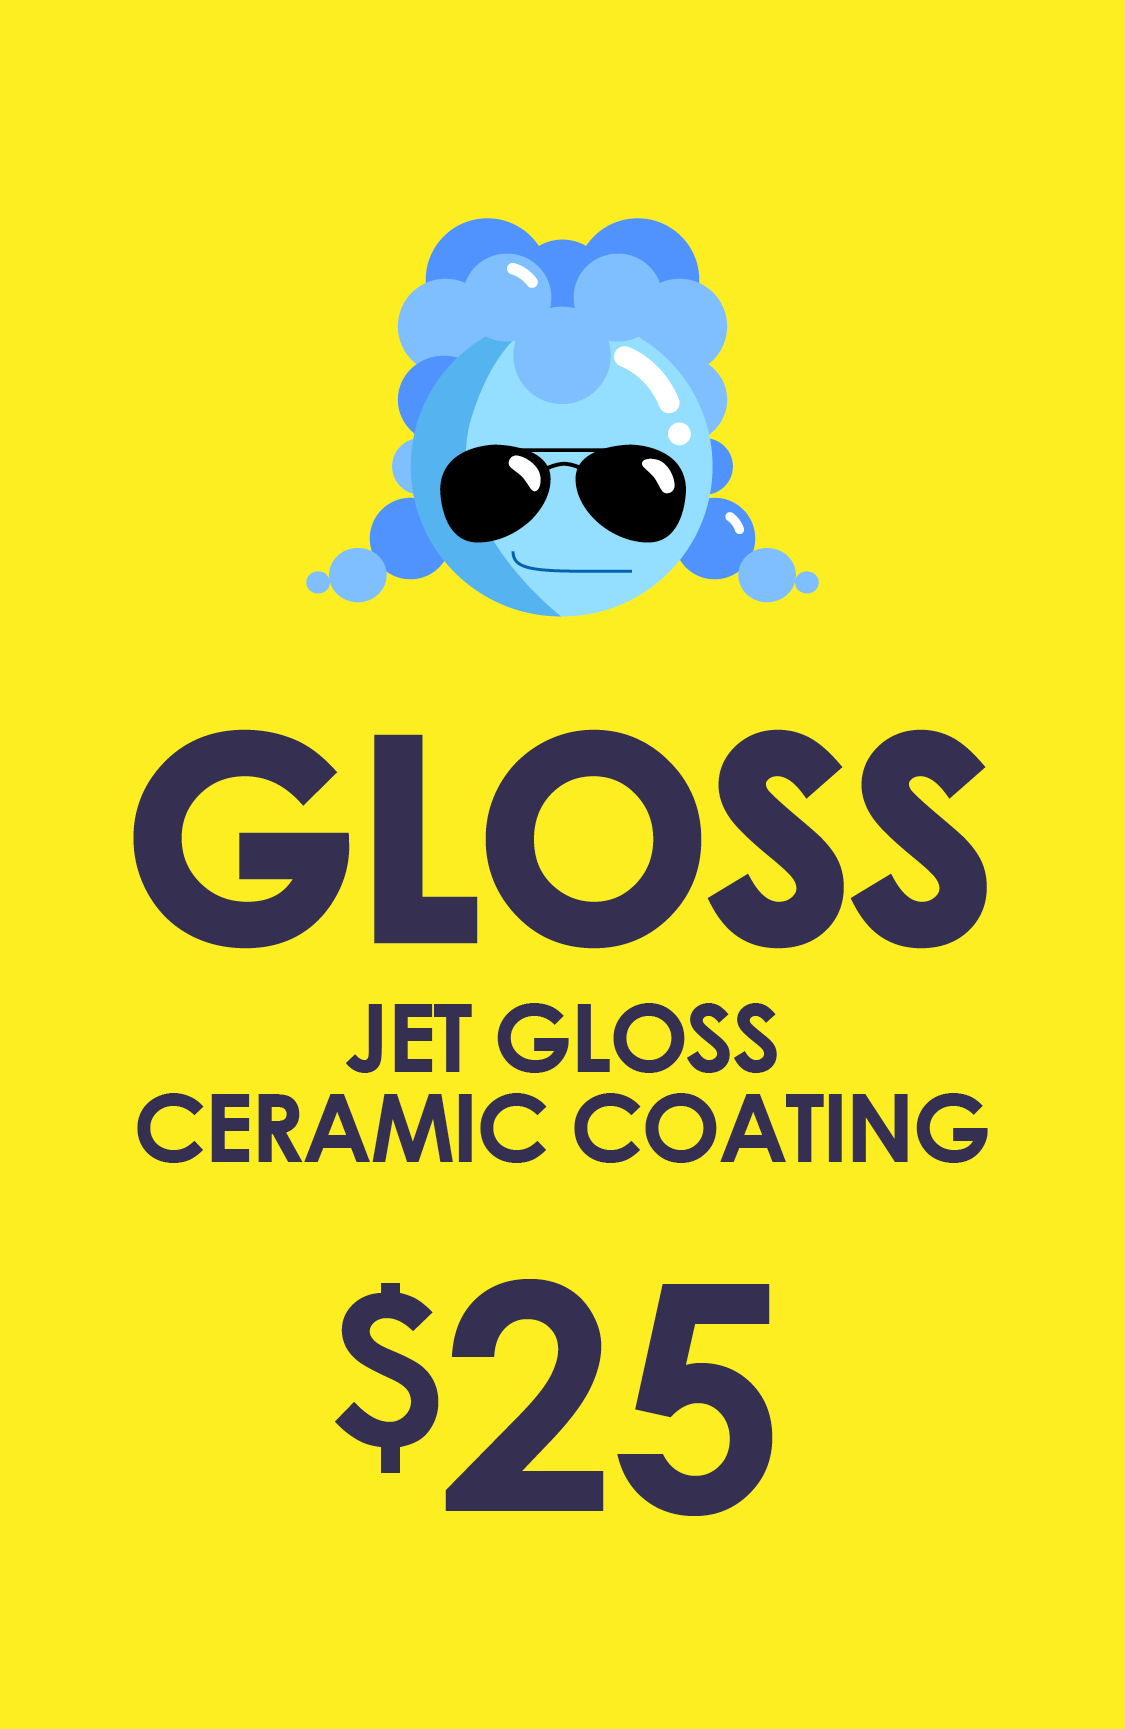 Gloss, Jet Gloss Ceramic Coating, $25